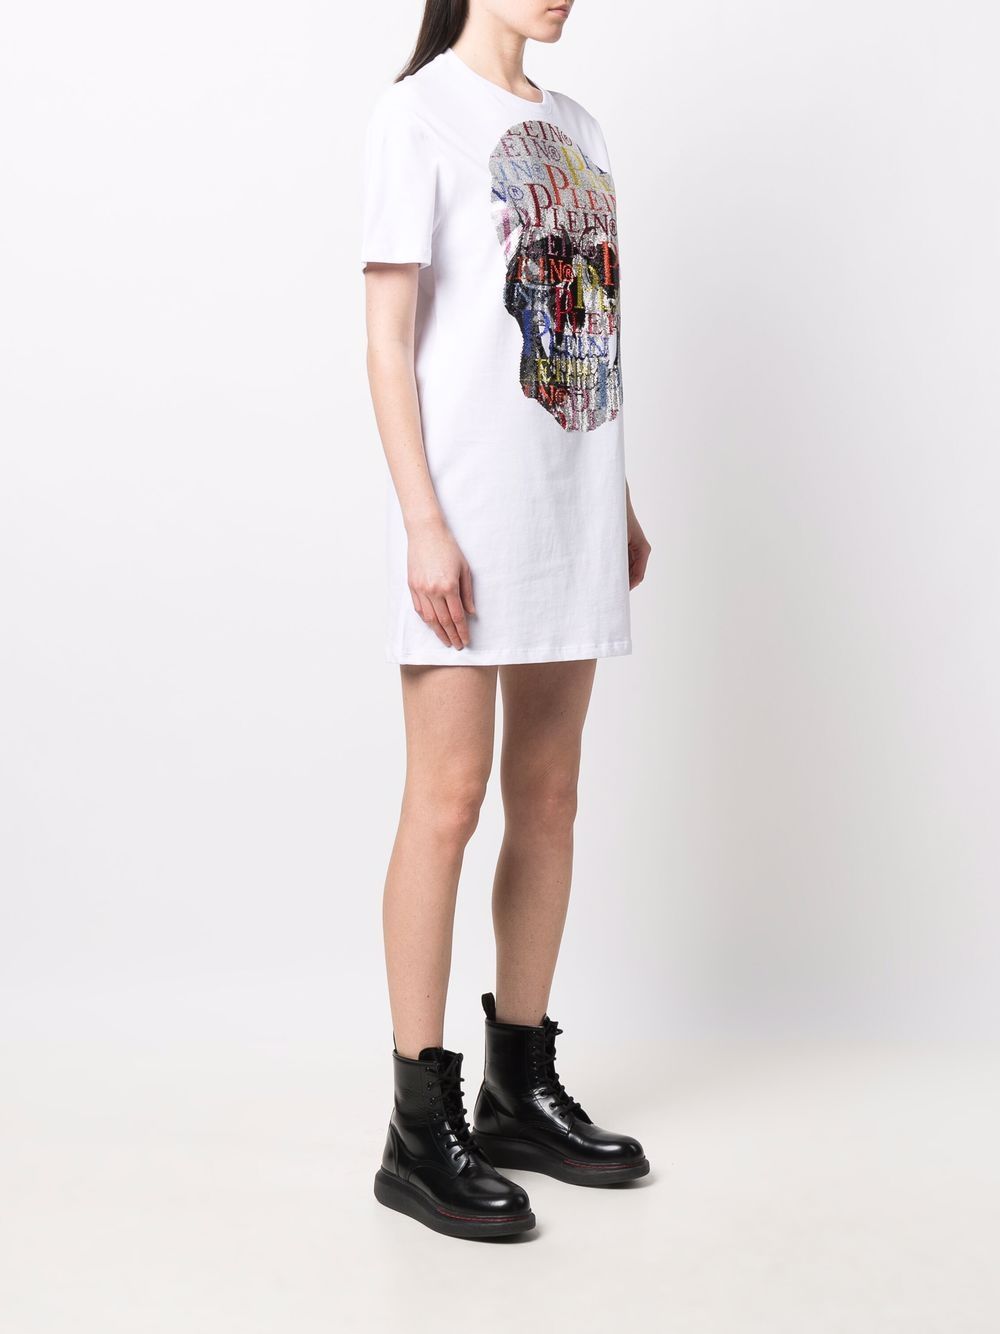 Shop Philipp Plein Skull rhinestone logo T-shirt dress with Express ...